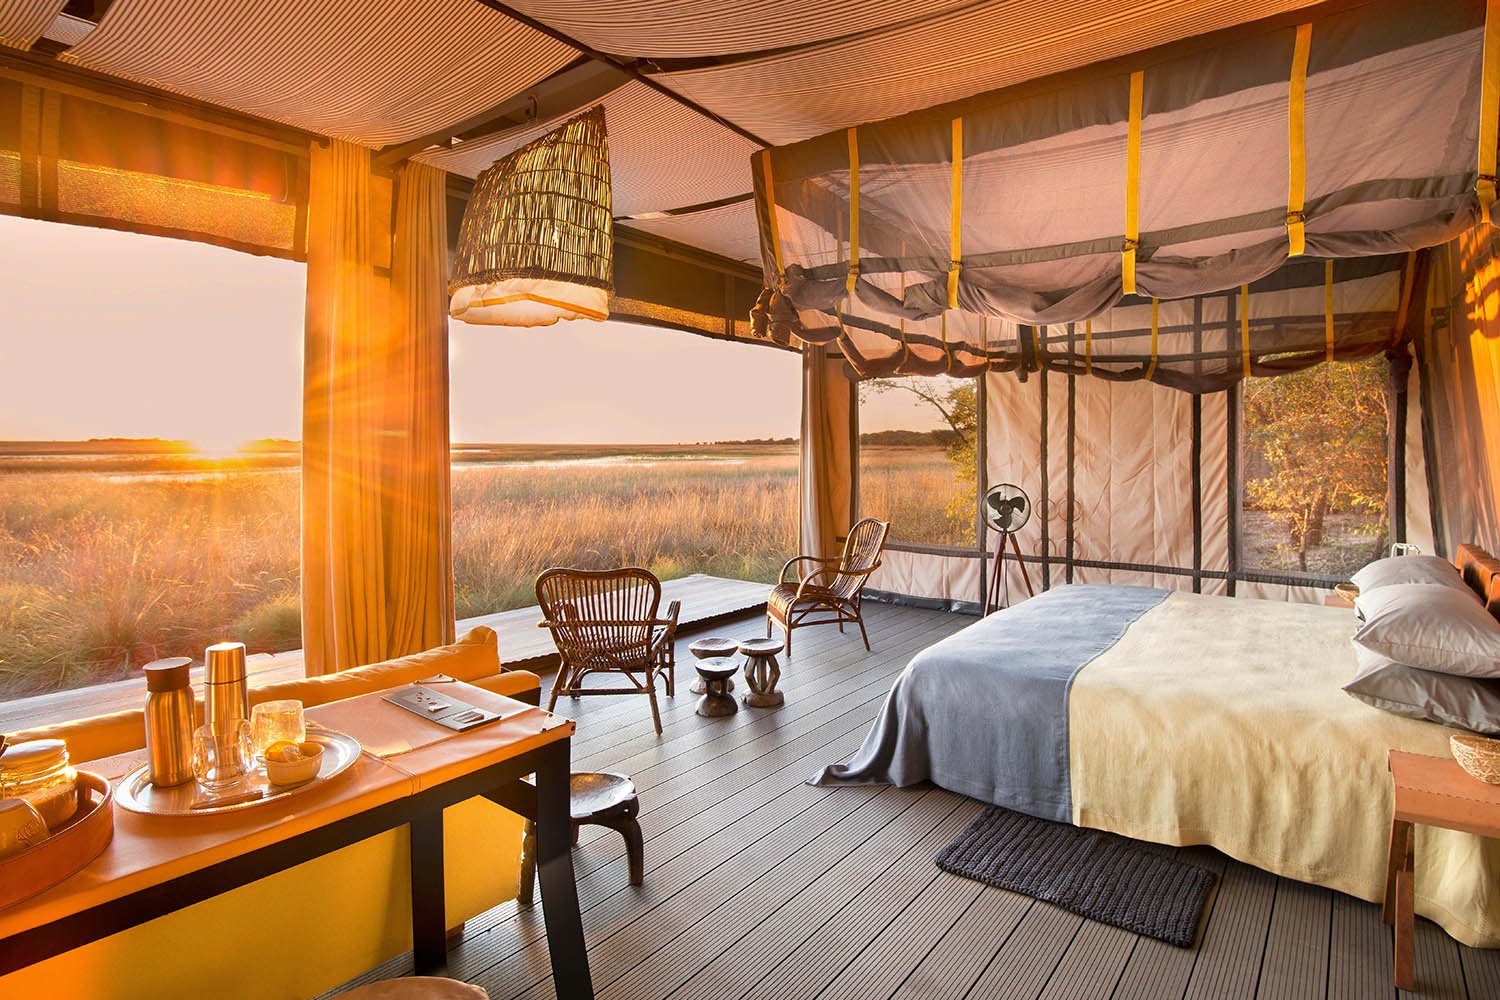 king-lewanika-lodge-zambia-in-style-lodges-safari-packages-liuwa-plains-bedroom-views.x66789.jpg